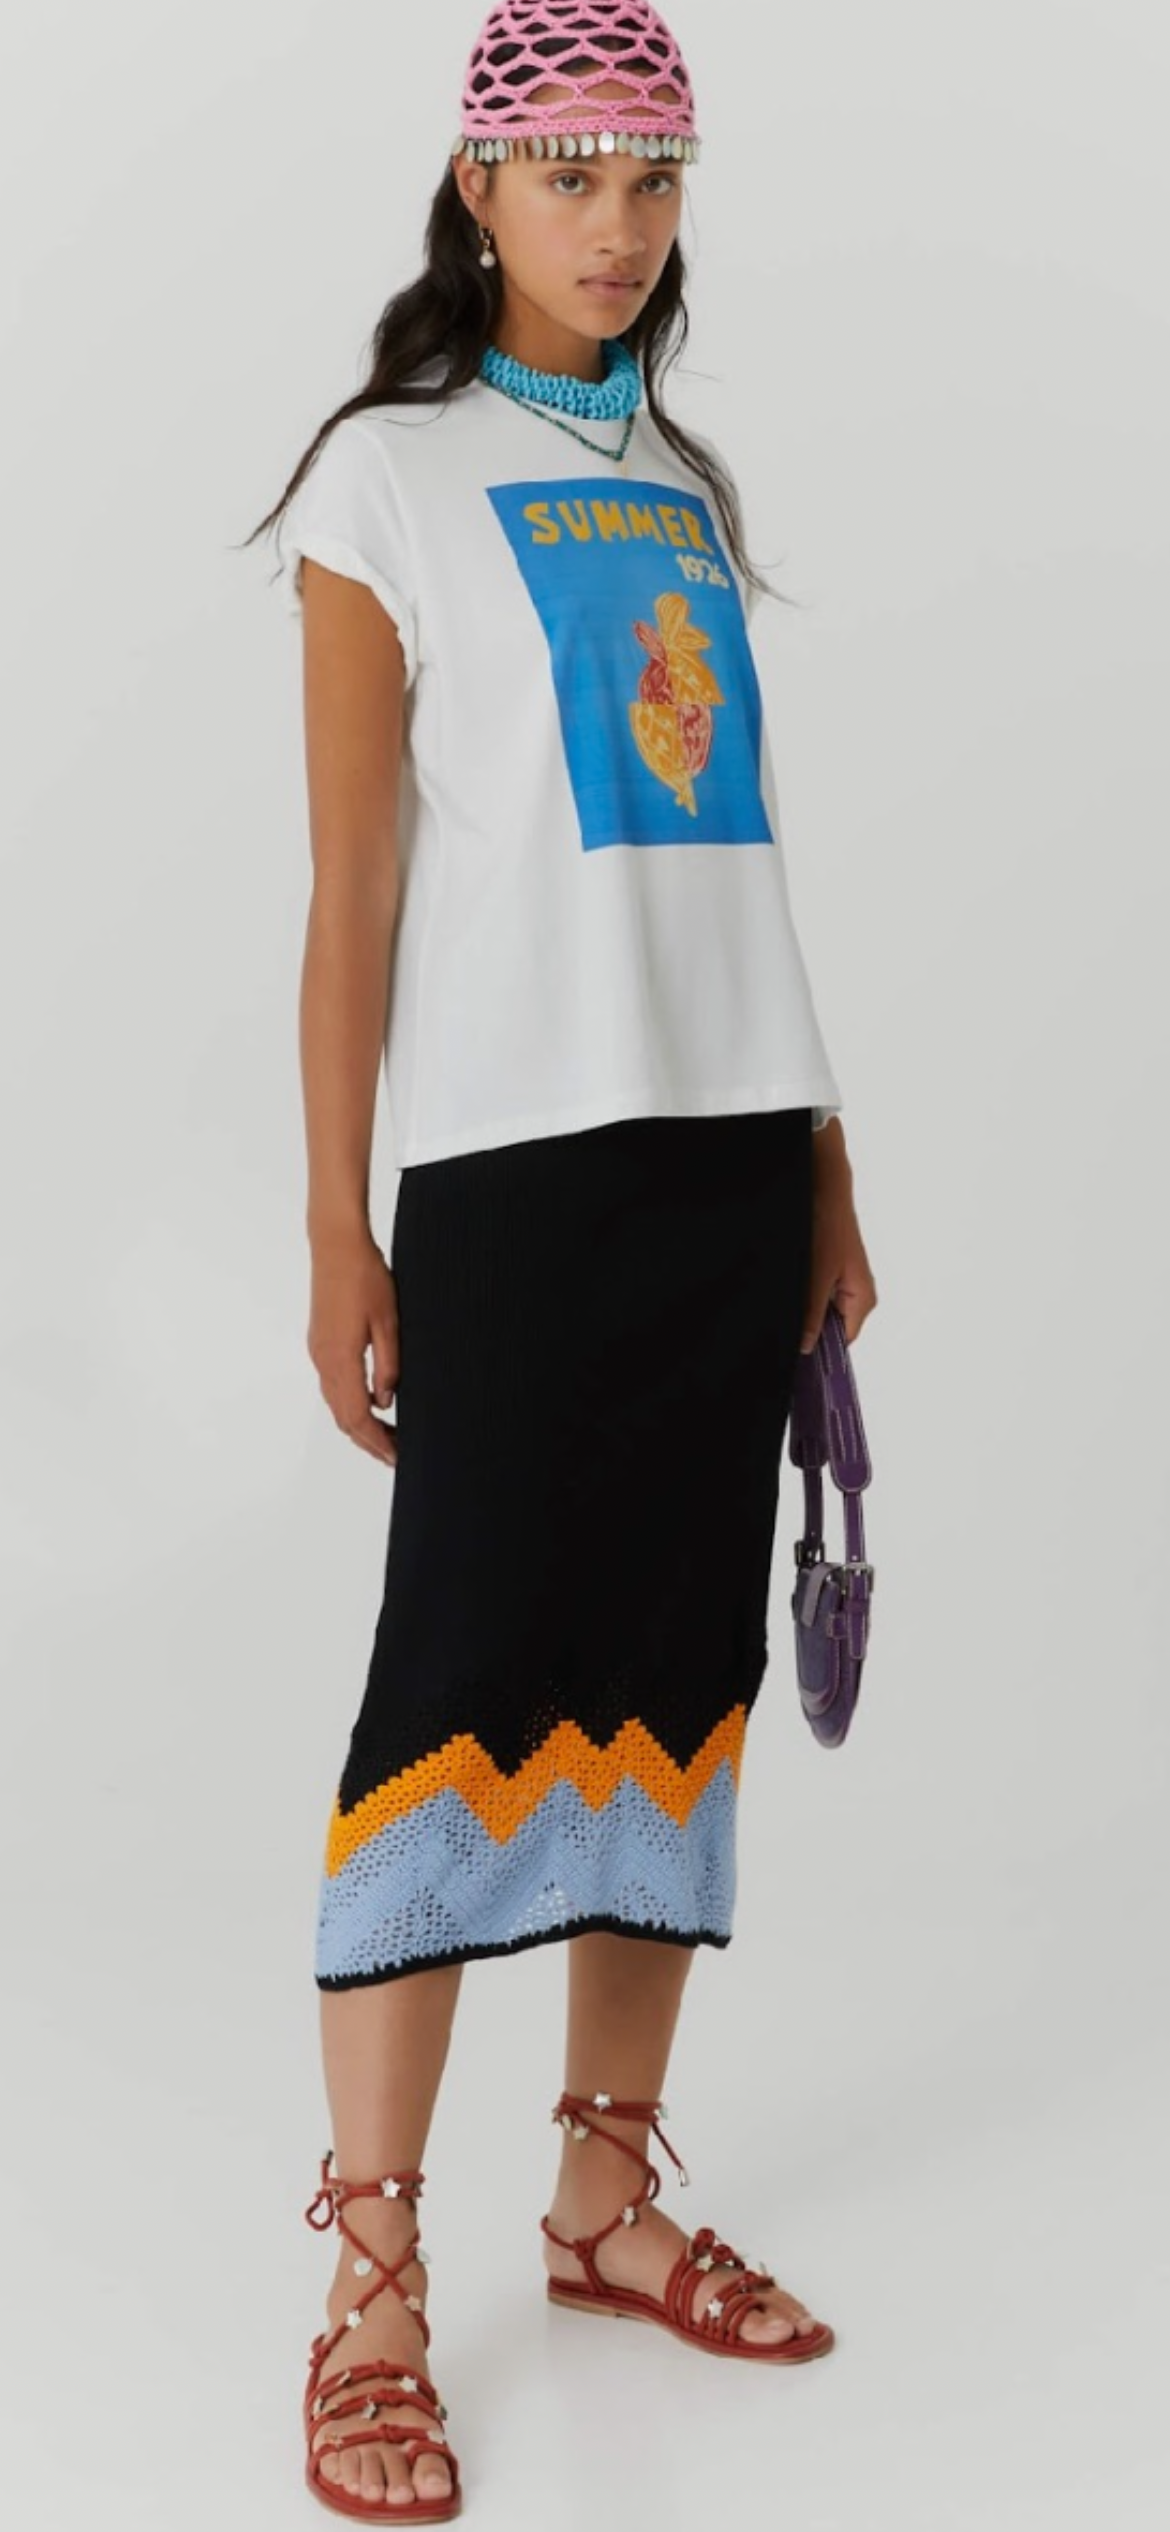 BEATRICE-Skirt with Multicolor Crochet Insert Black